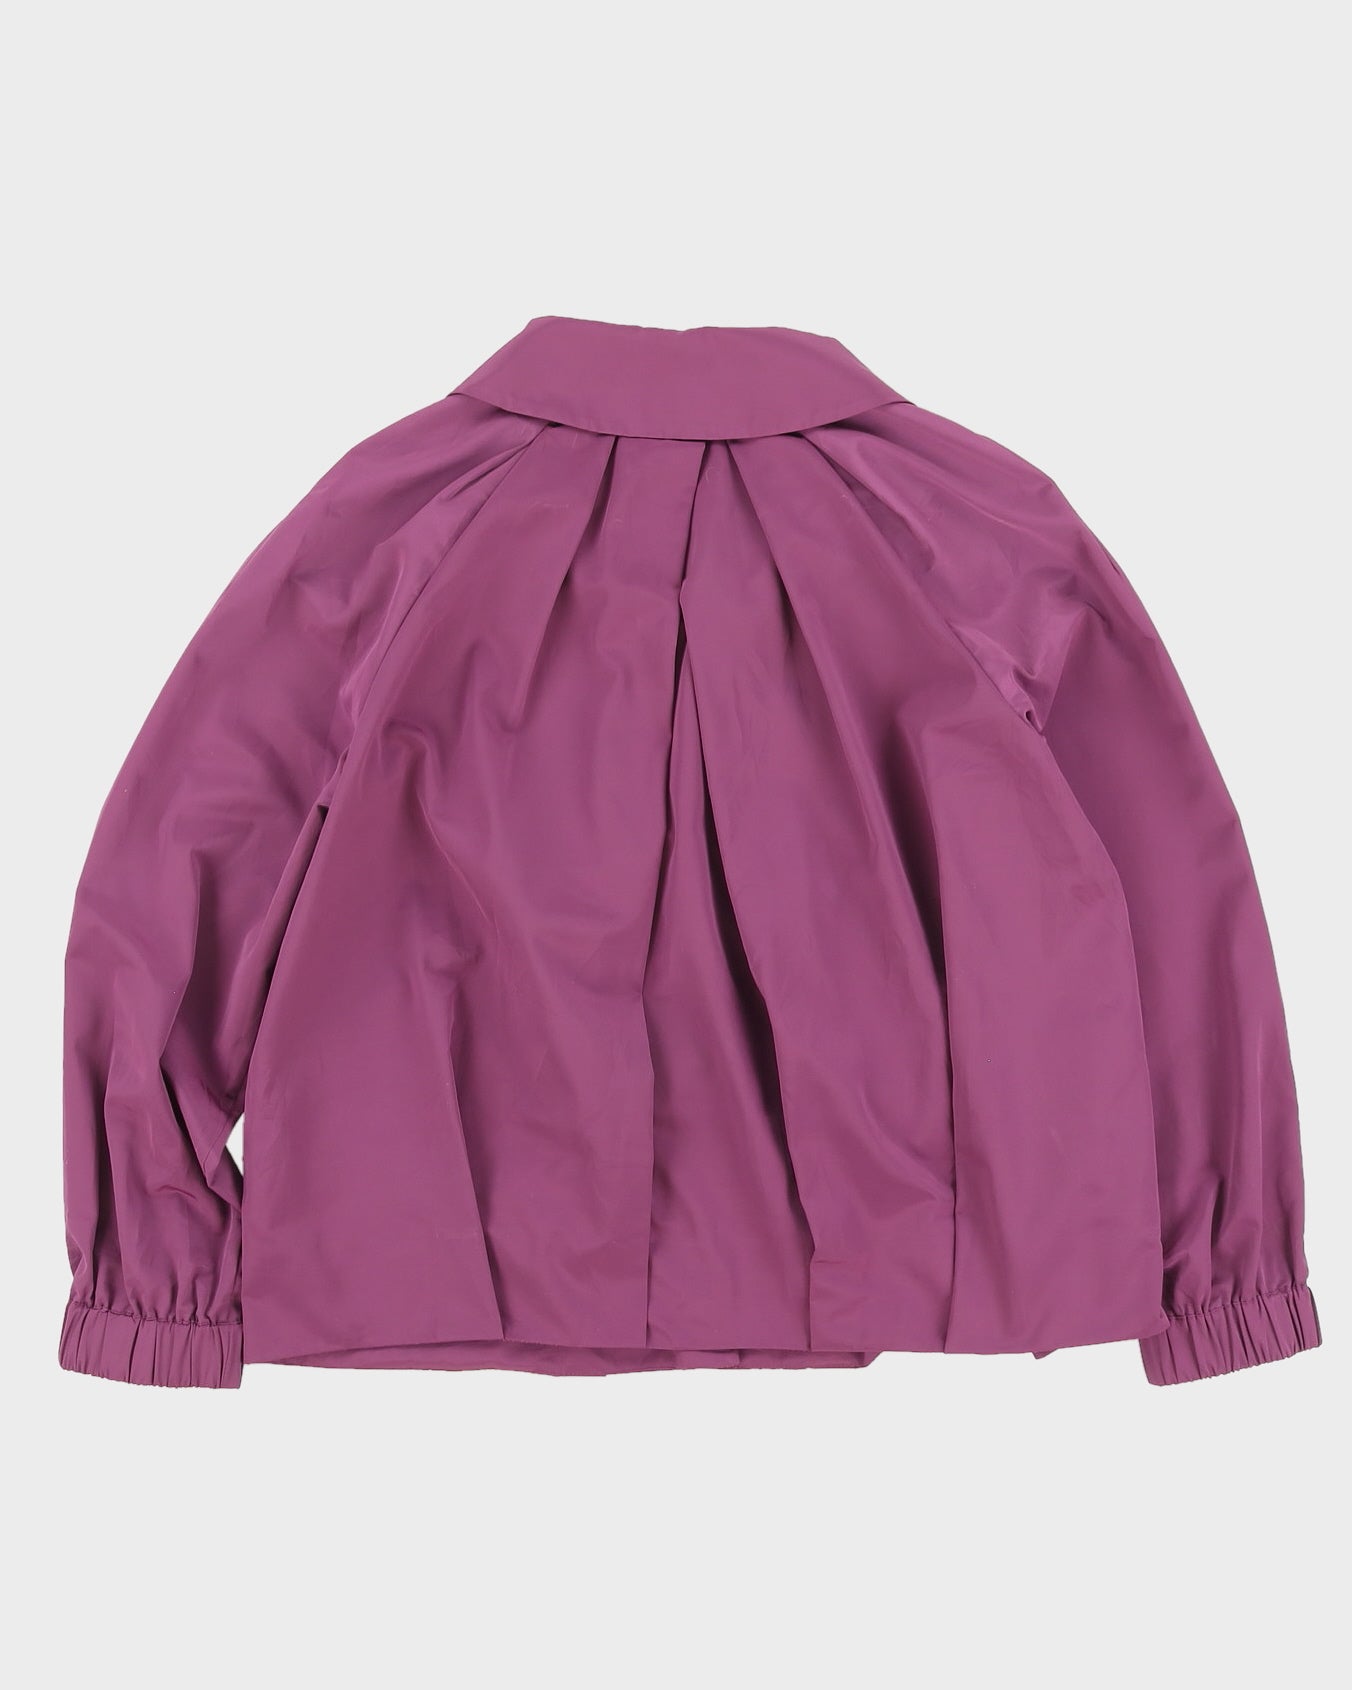 Simply Vera Wang Purple Jacket - L